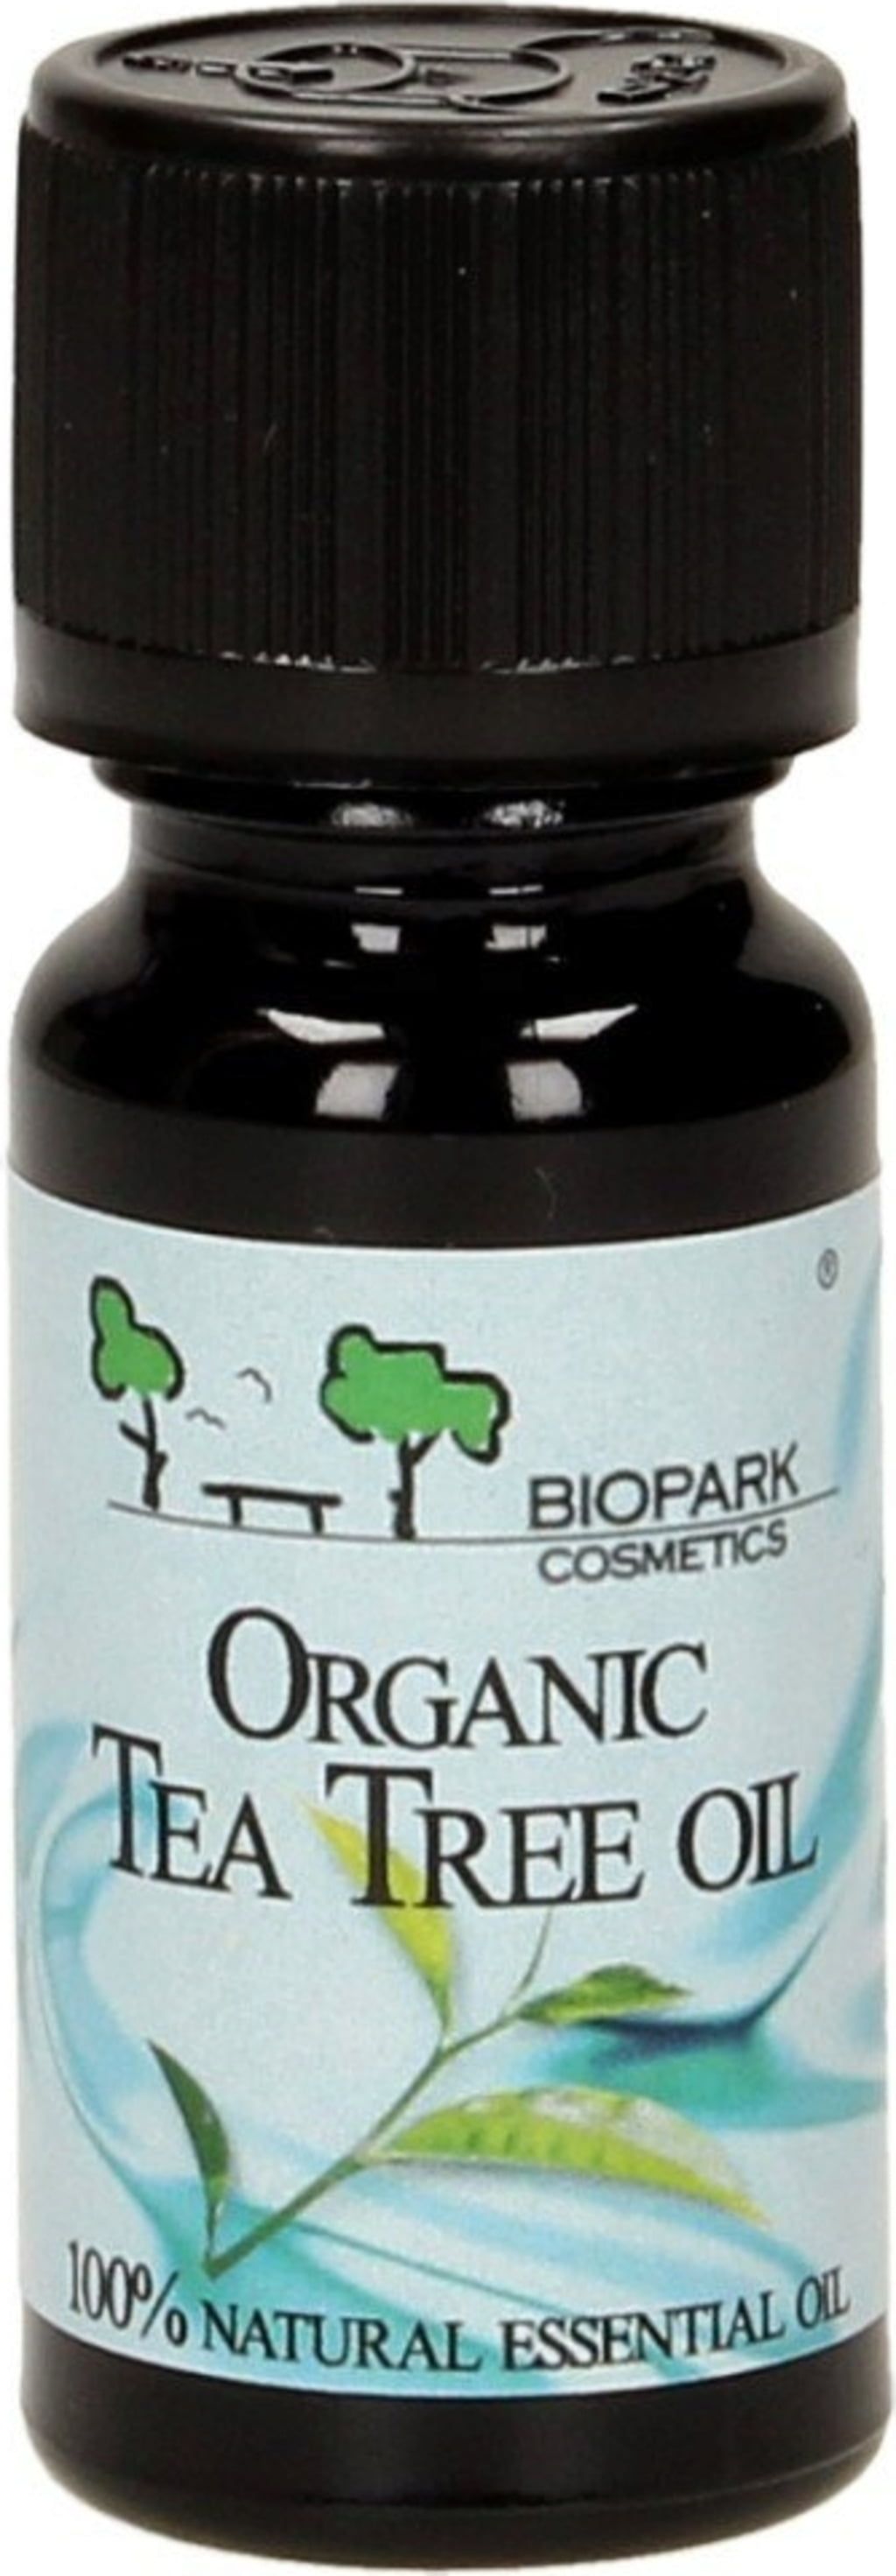 Biopark Cosmetics Organic Tea Tree Essential Oil - 10 ml